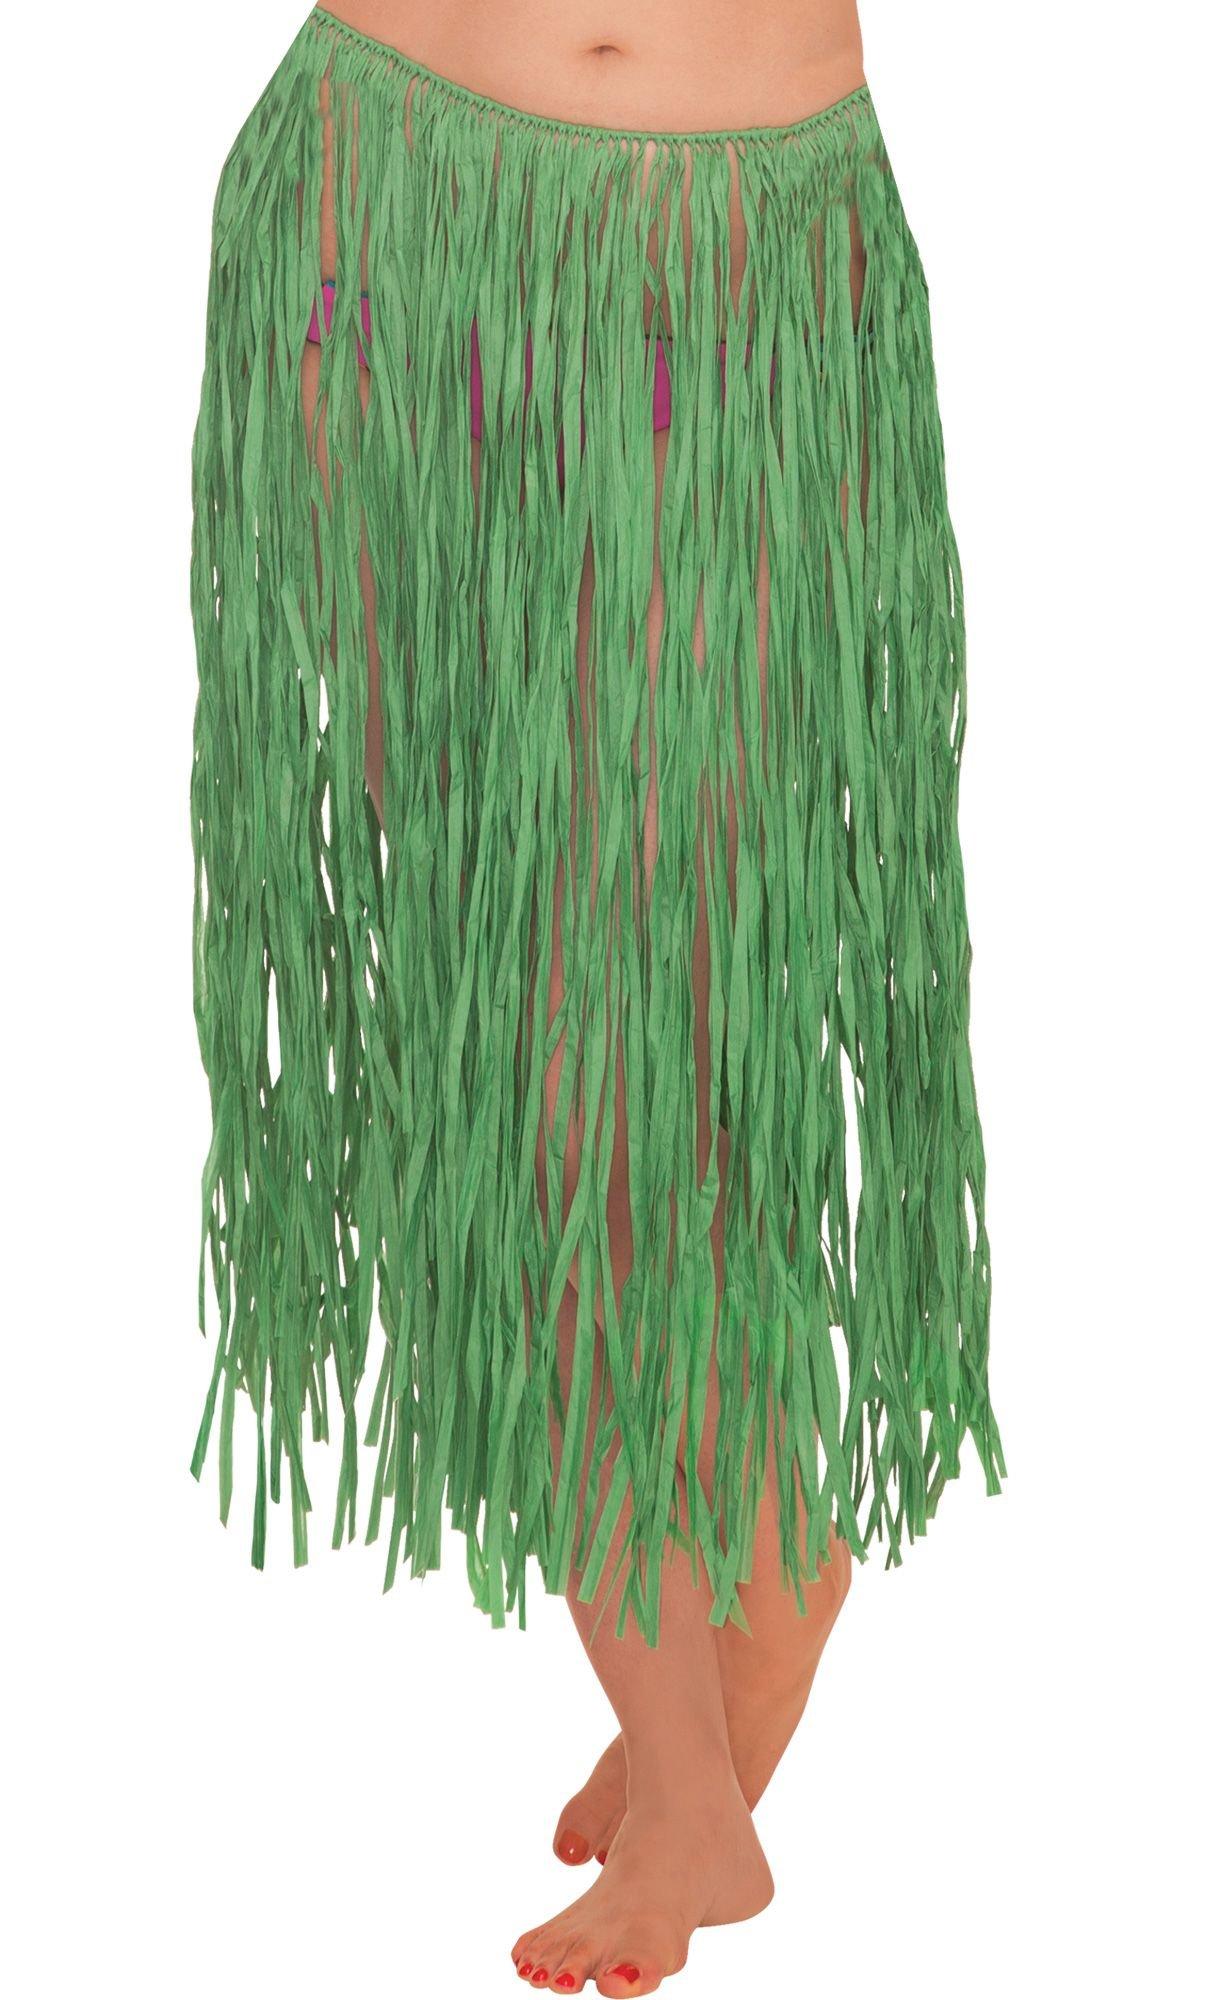 Child Plastic Mini Faux Grass Skirt, 12in